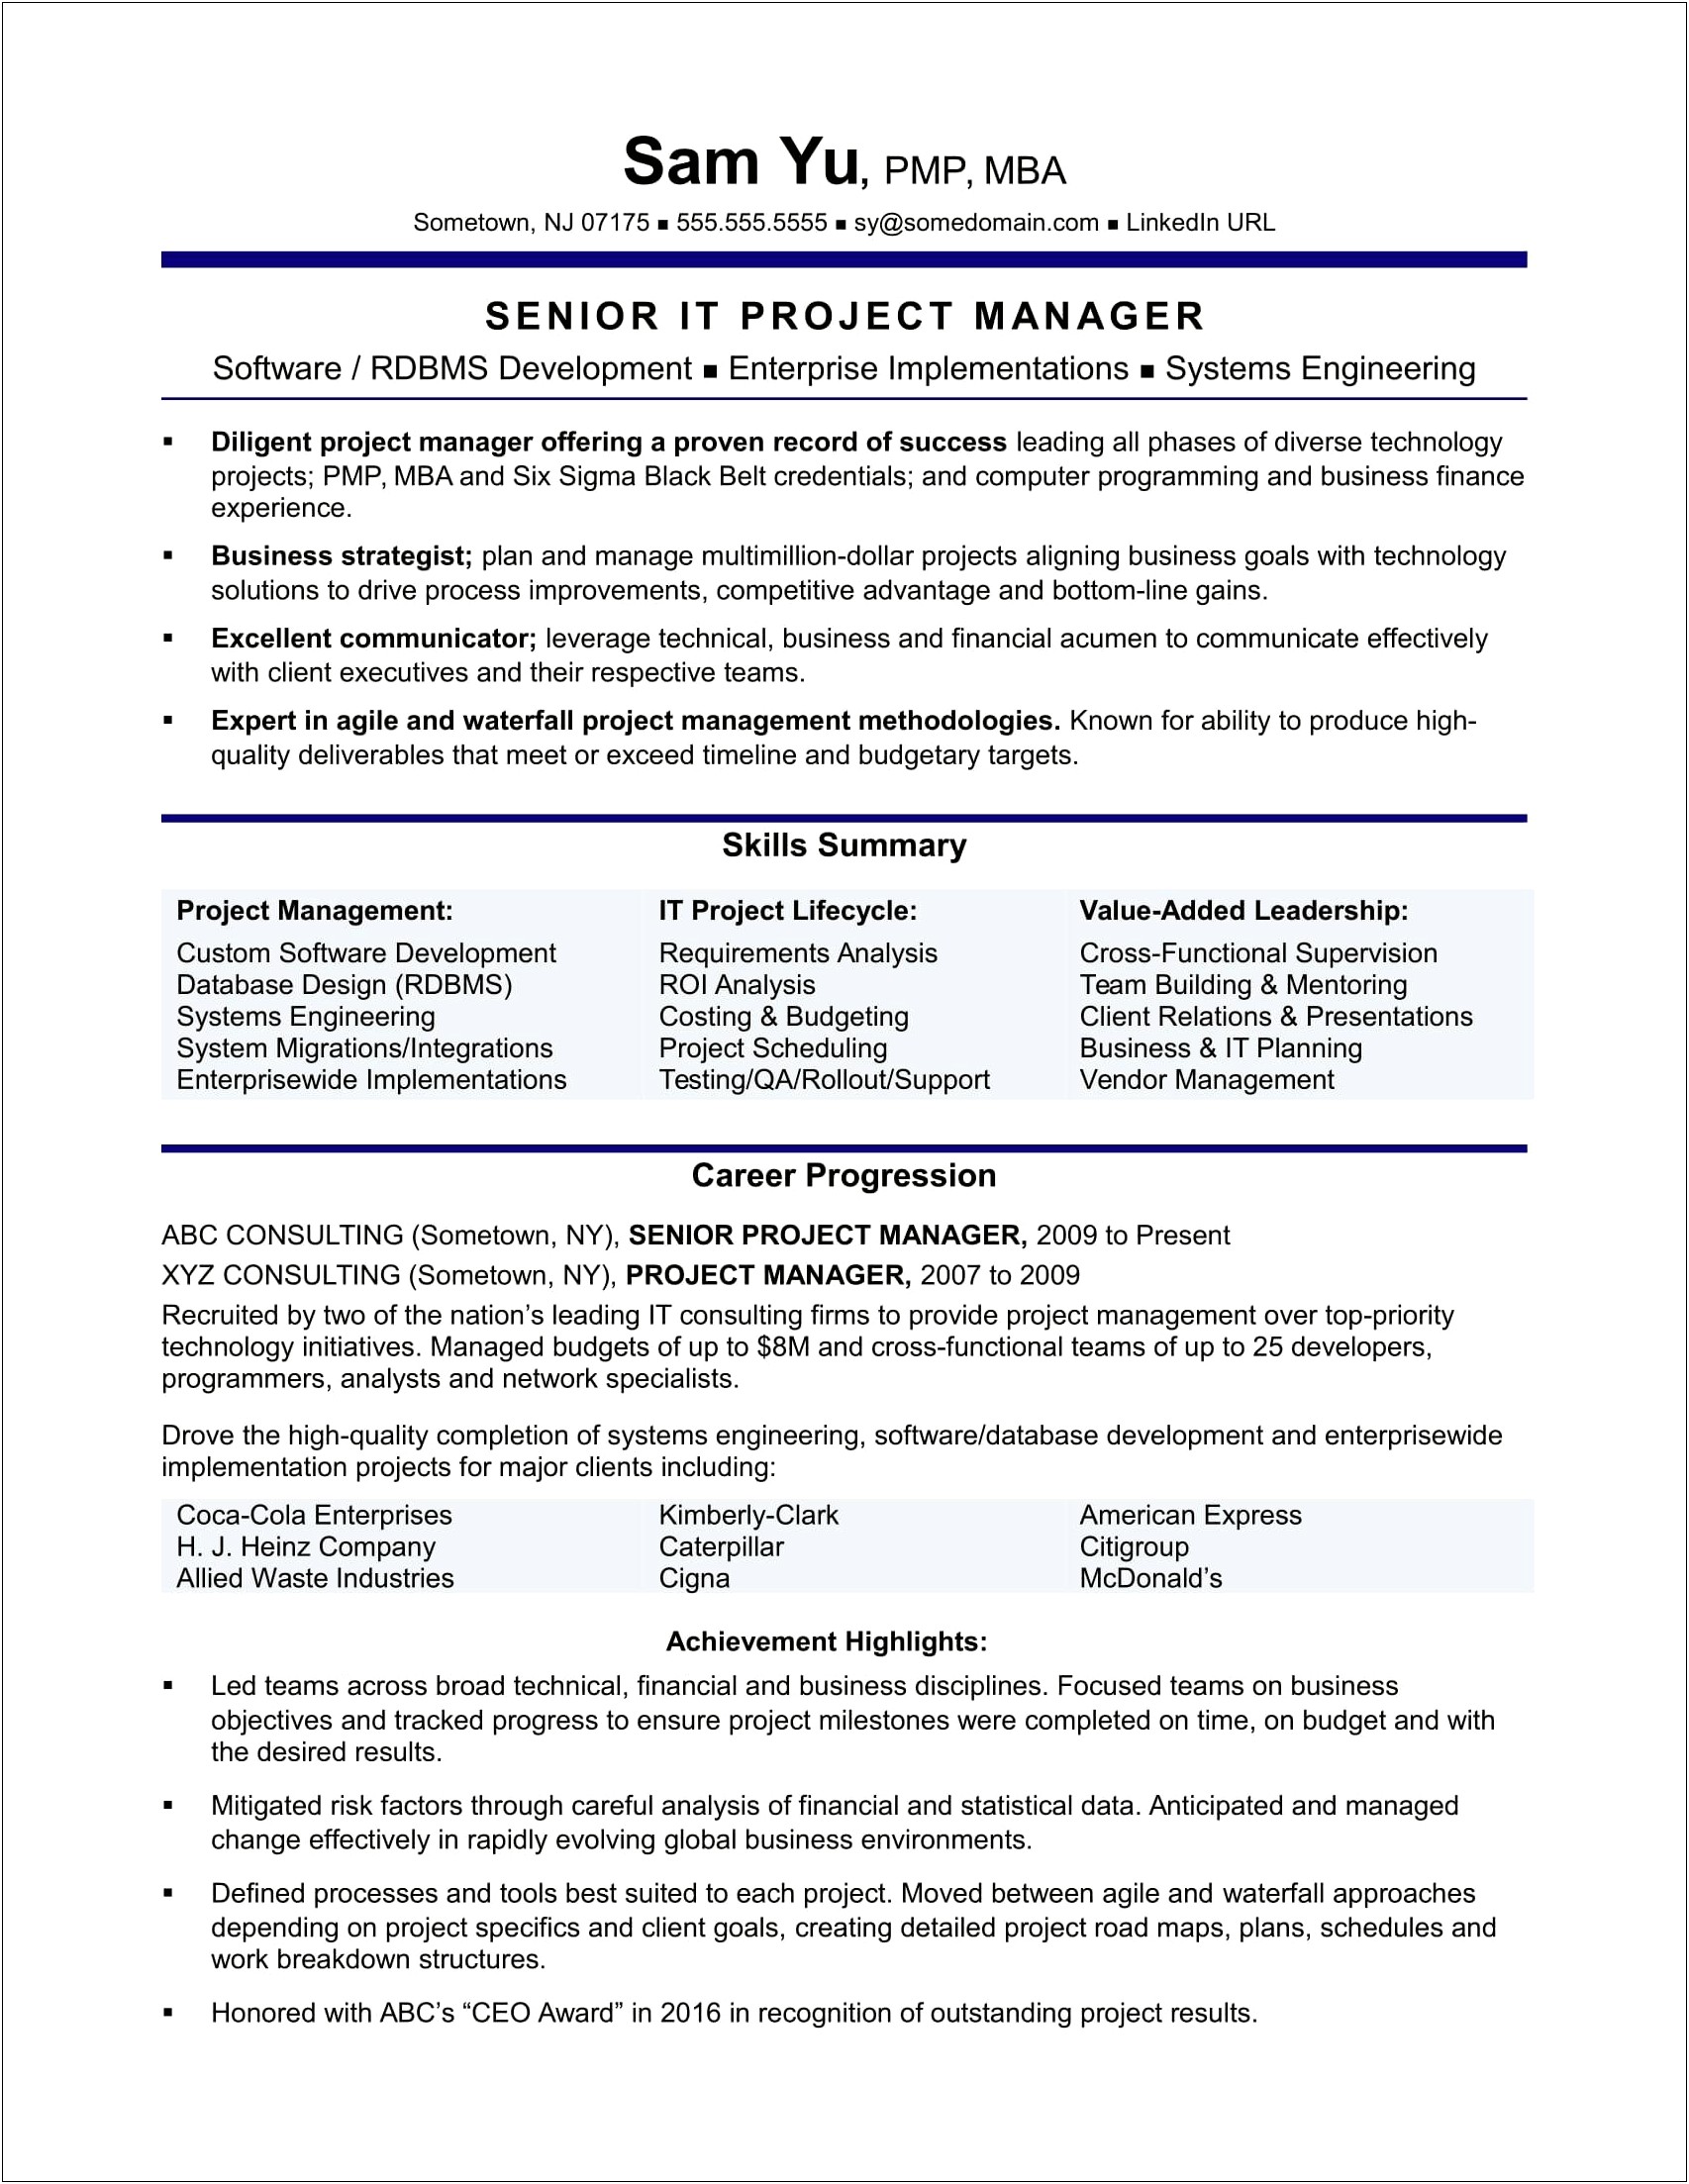 Best Resume Title For Change Management Manager